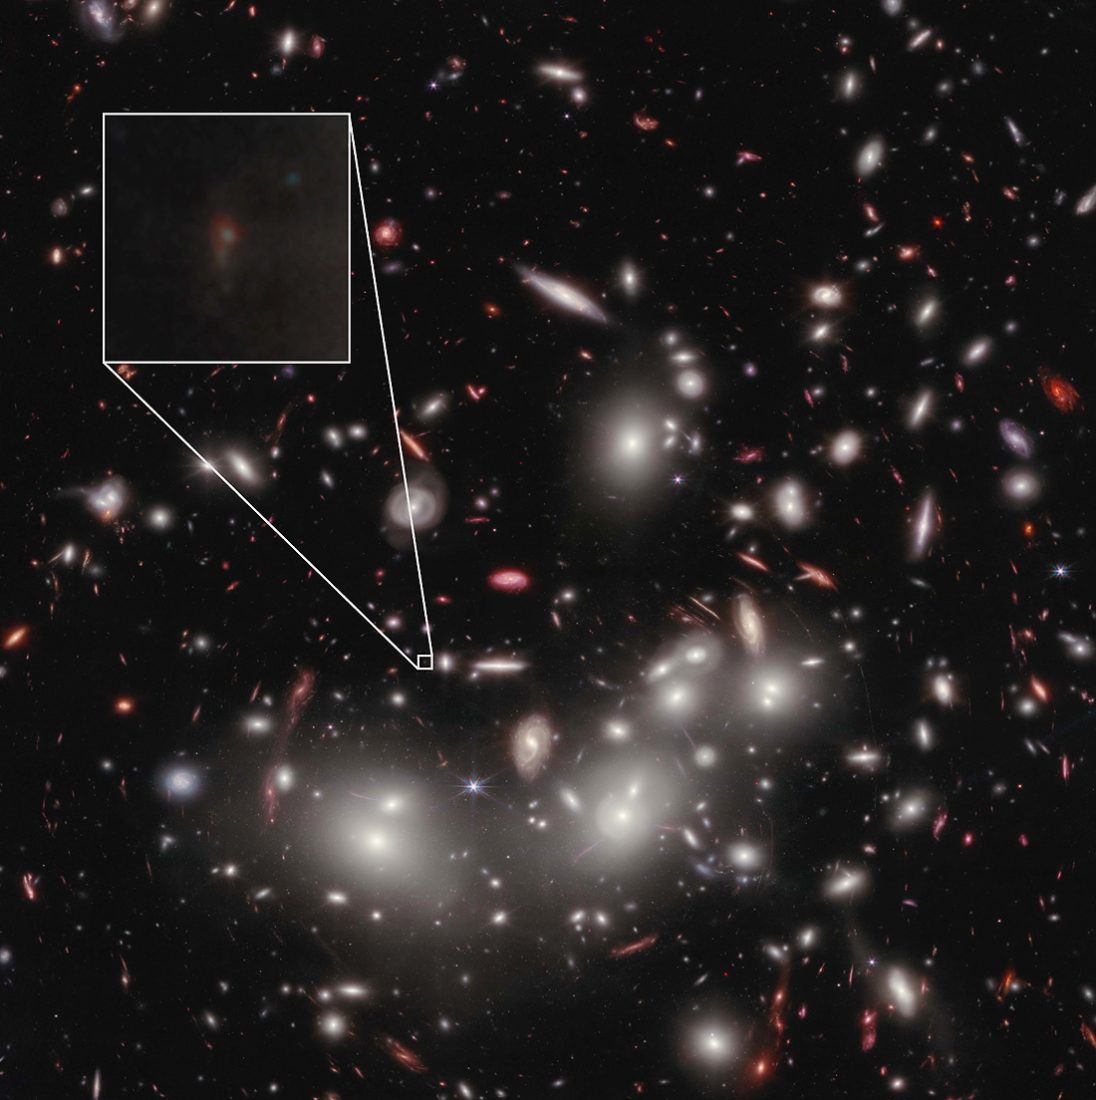 atradimai Abell2744 JD1+galaxy+NASA+ESA+CSA+and+others